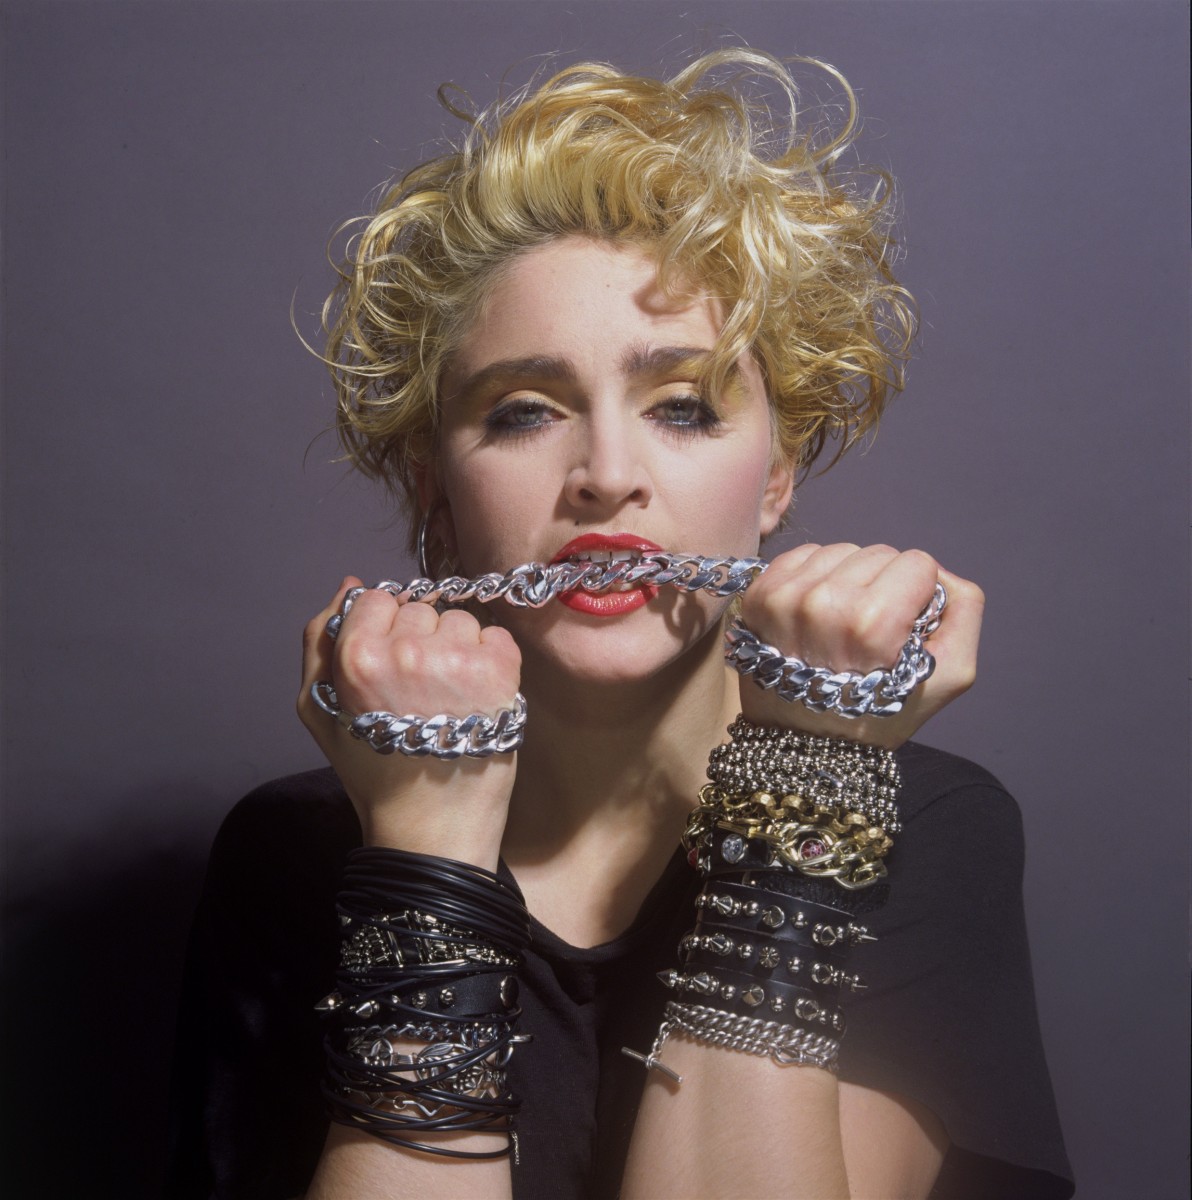 Madonna photo 898 of 1301 pics, wallpaper - photo #583786 - ThePlace2